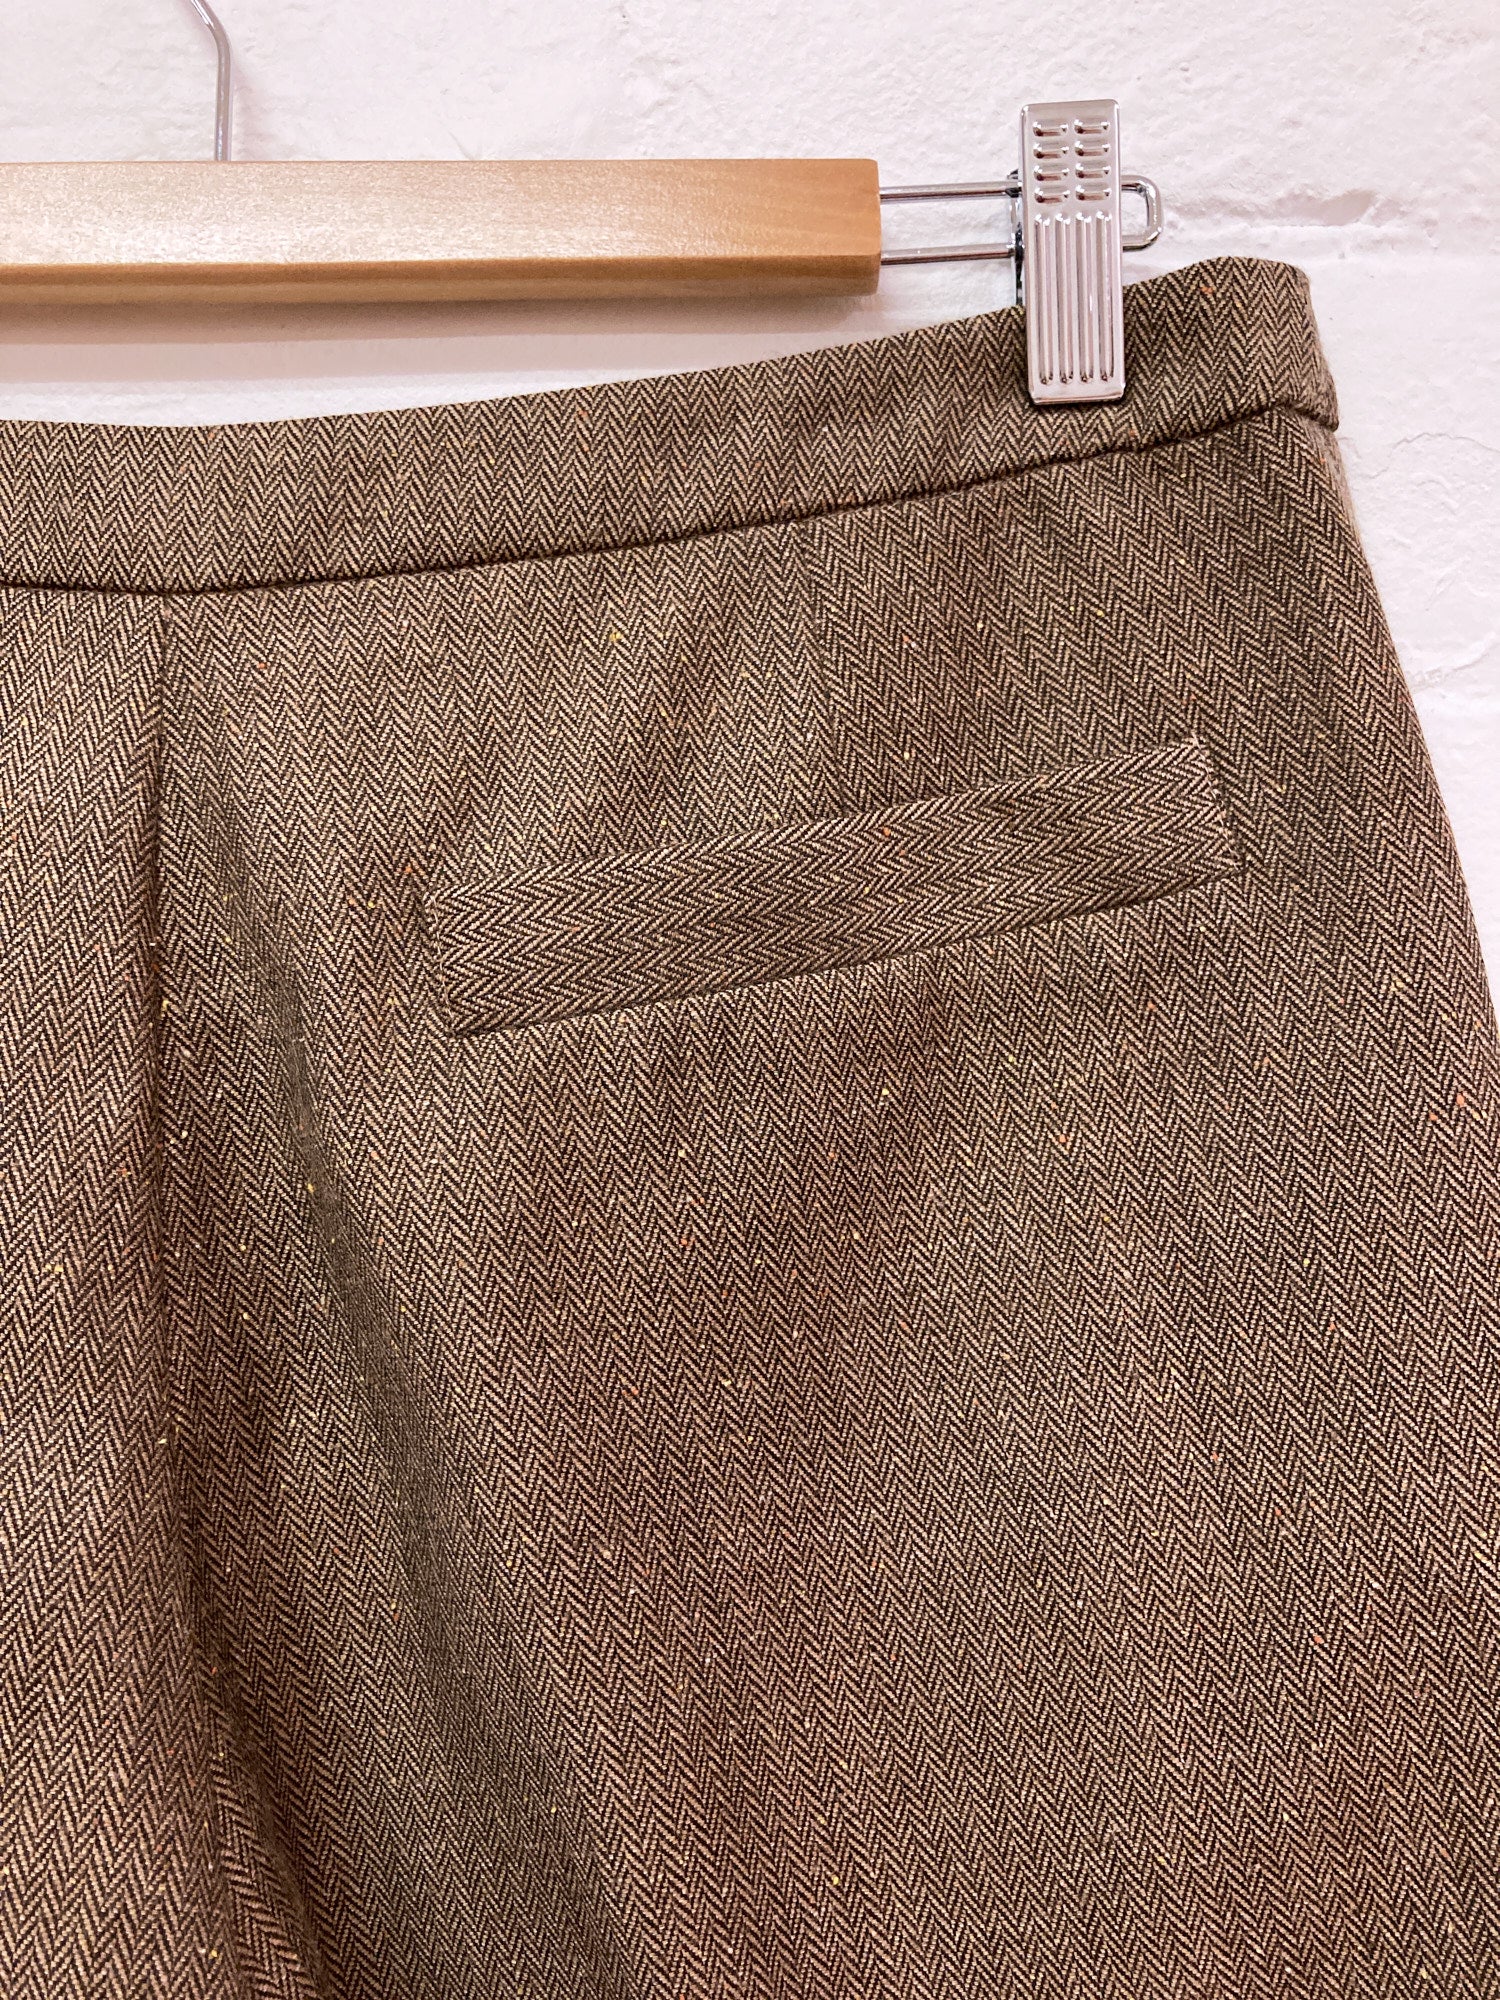 Kenzo brown wool cotton silk blend herringbone trousers - size 40